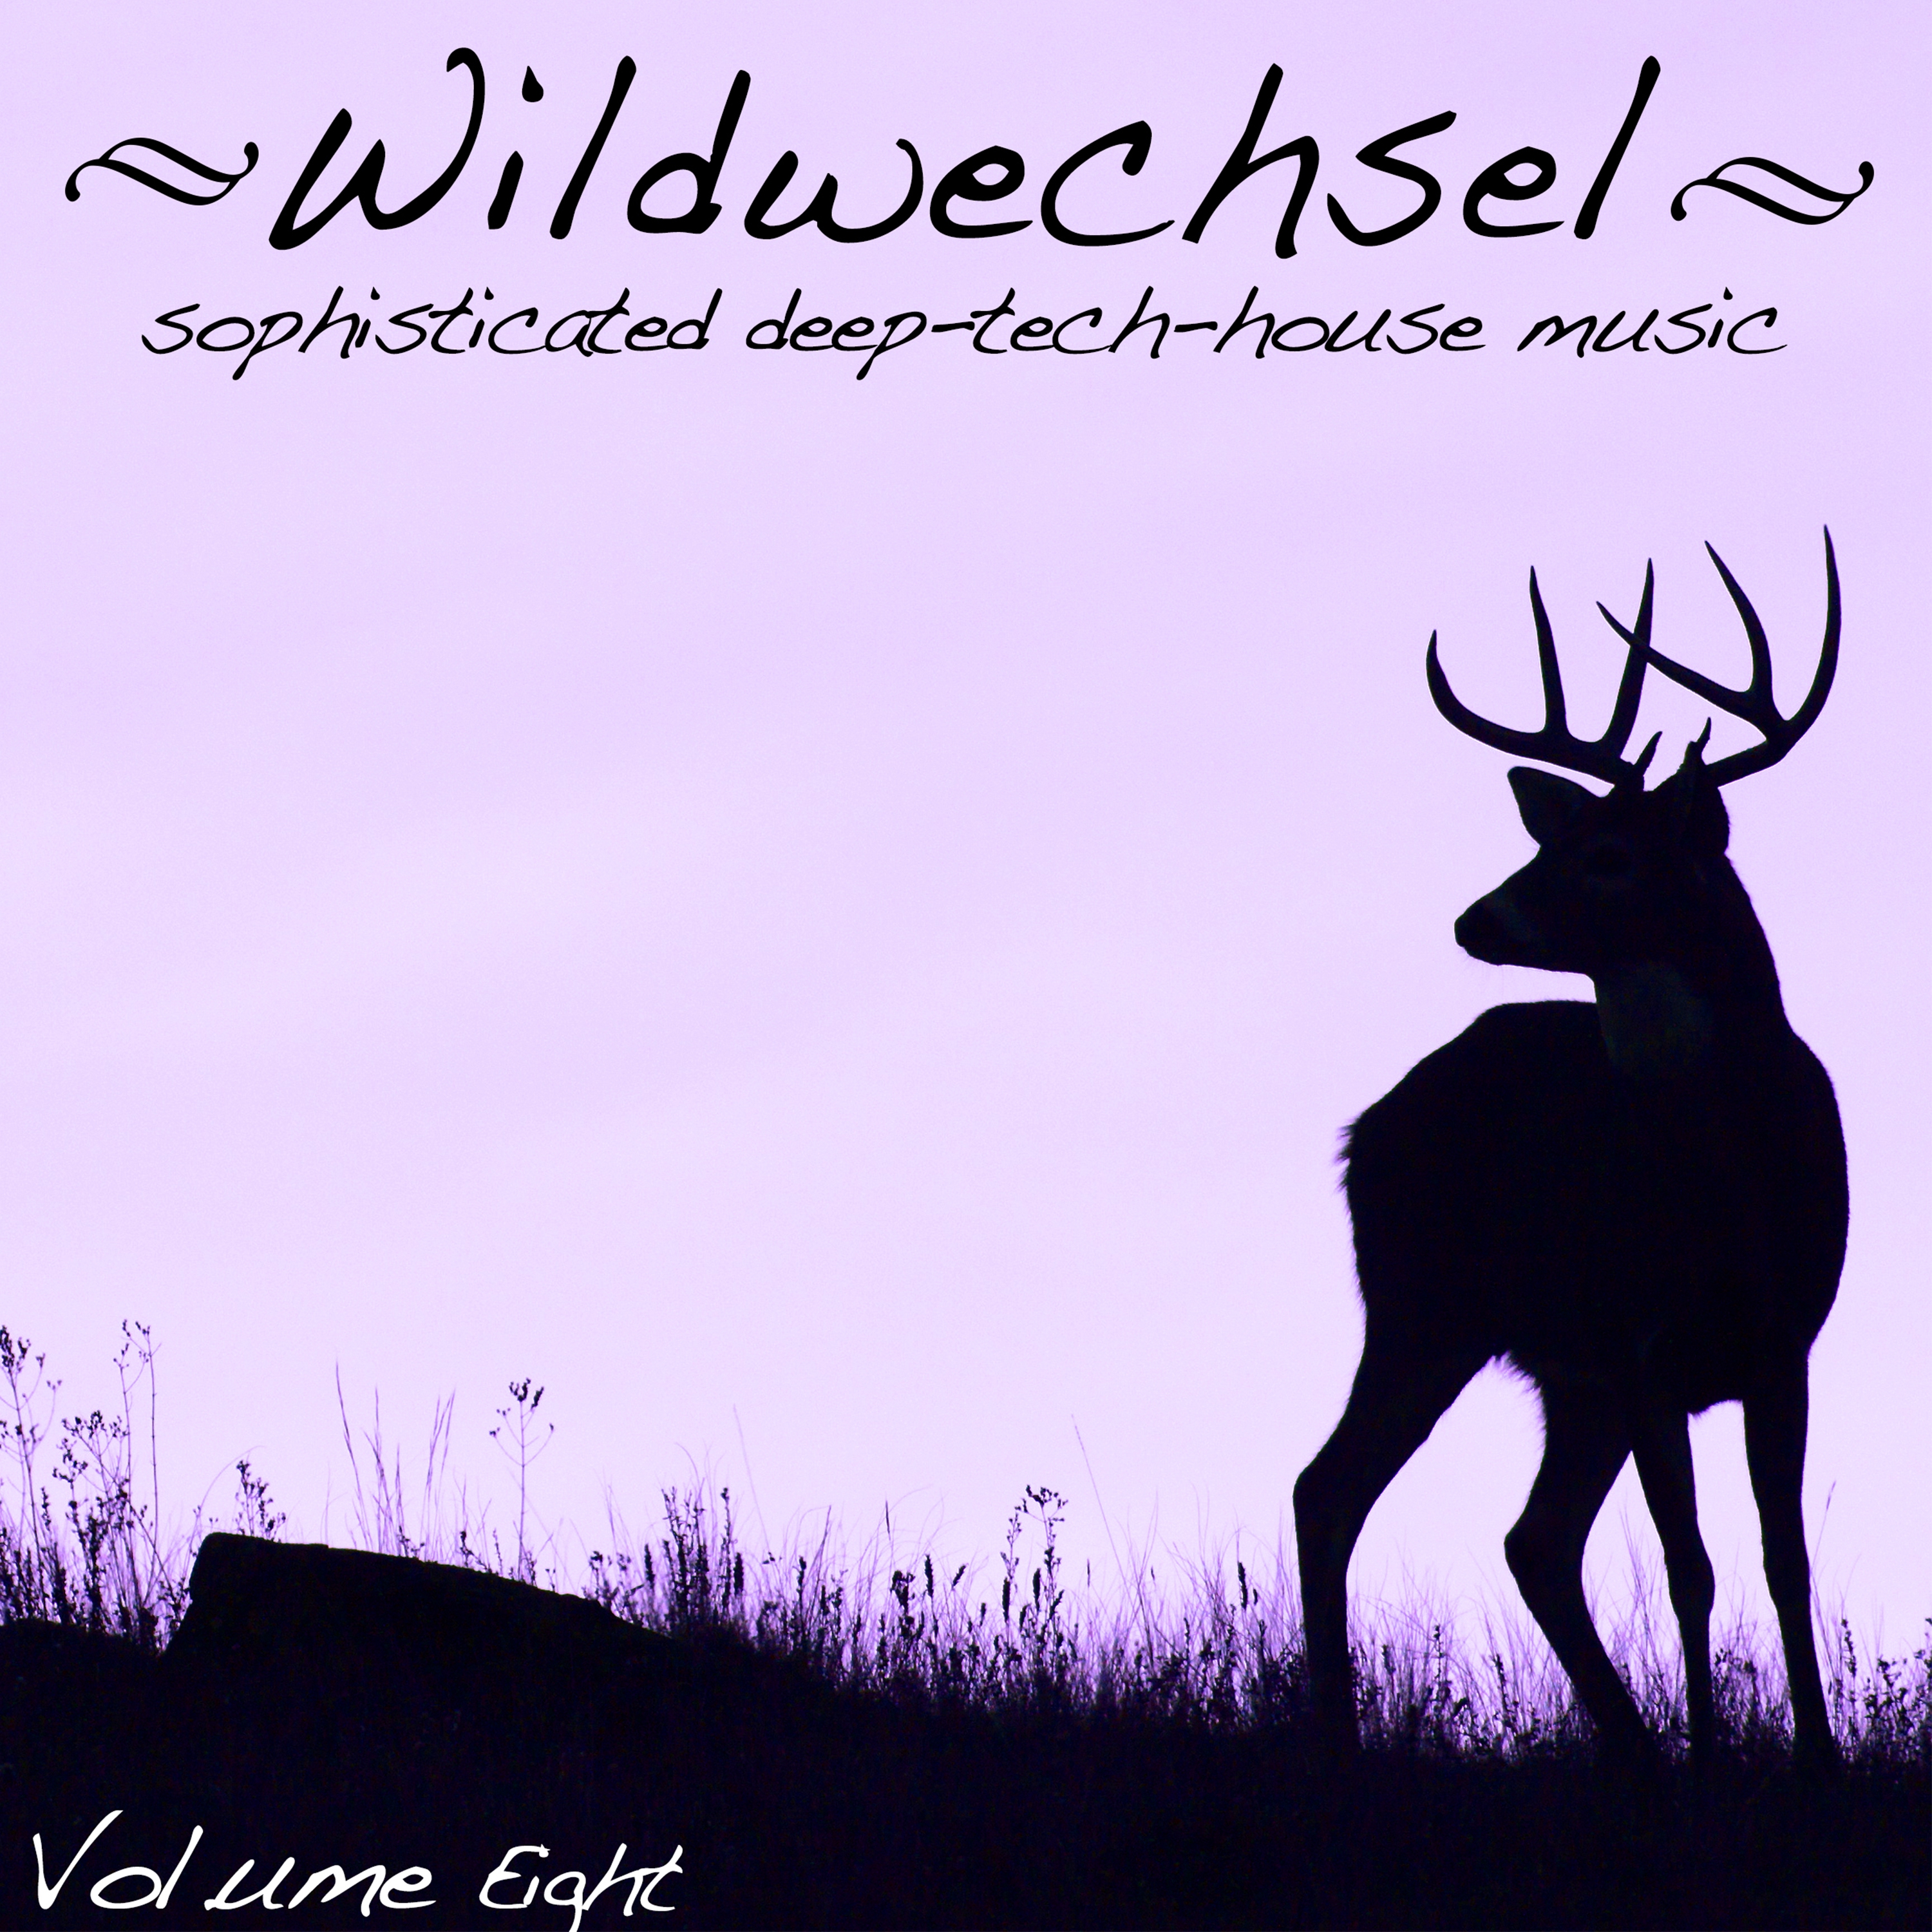 Wildwechsel, Vol. 8 - Sophisticated Deep-Tech-House Music